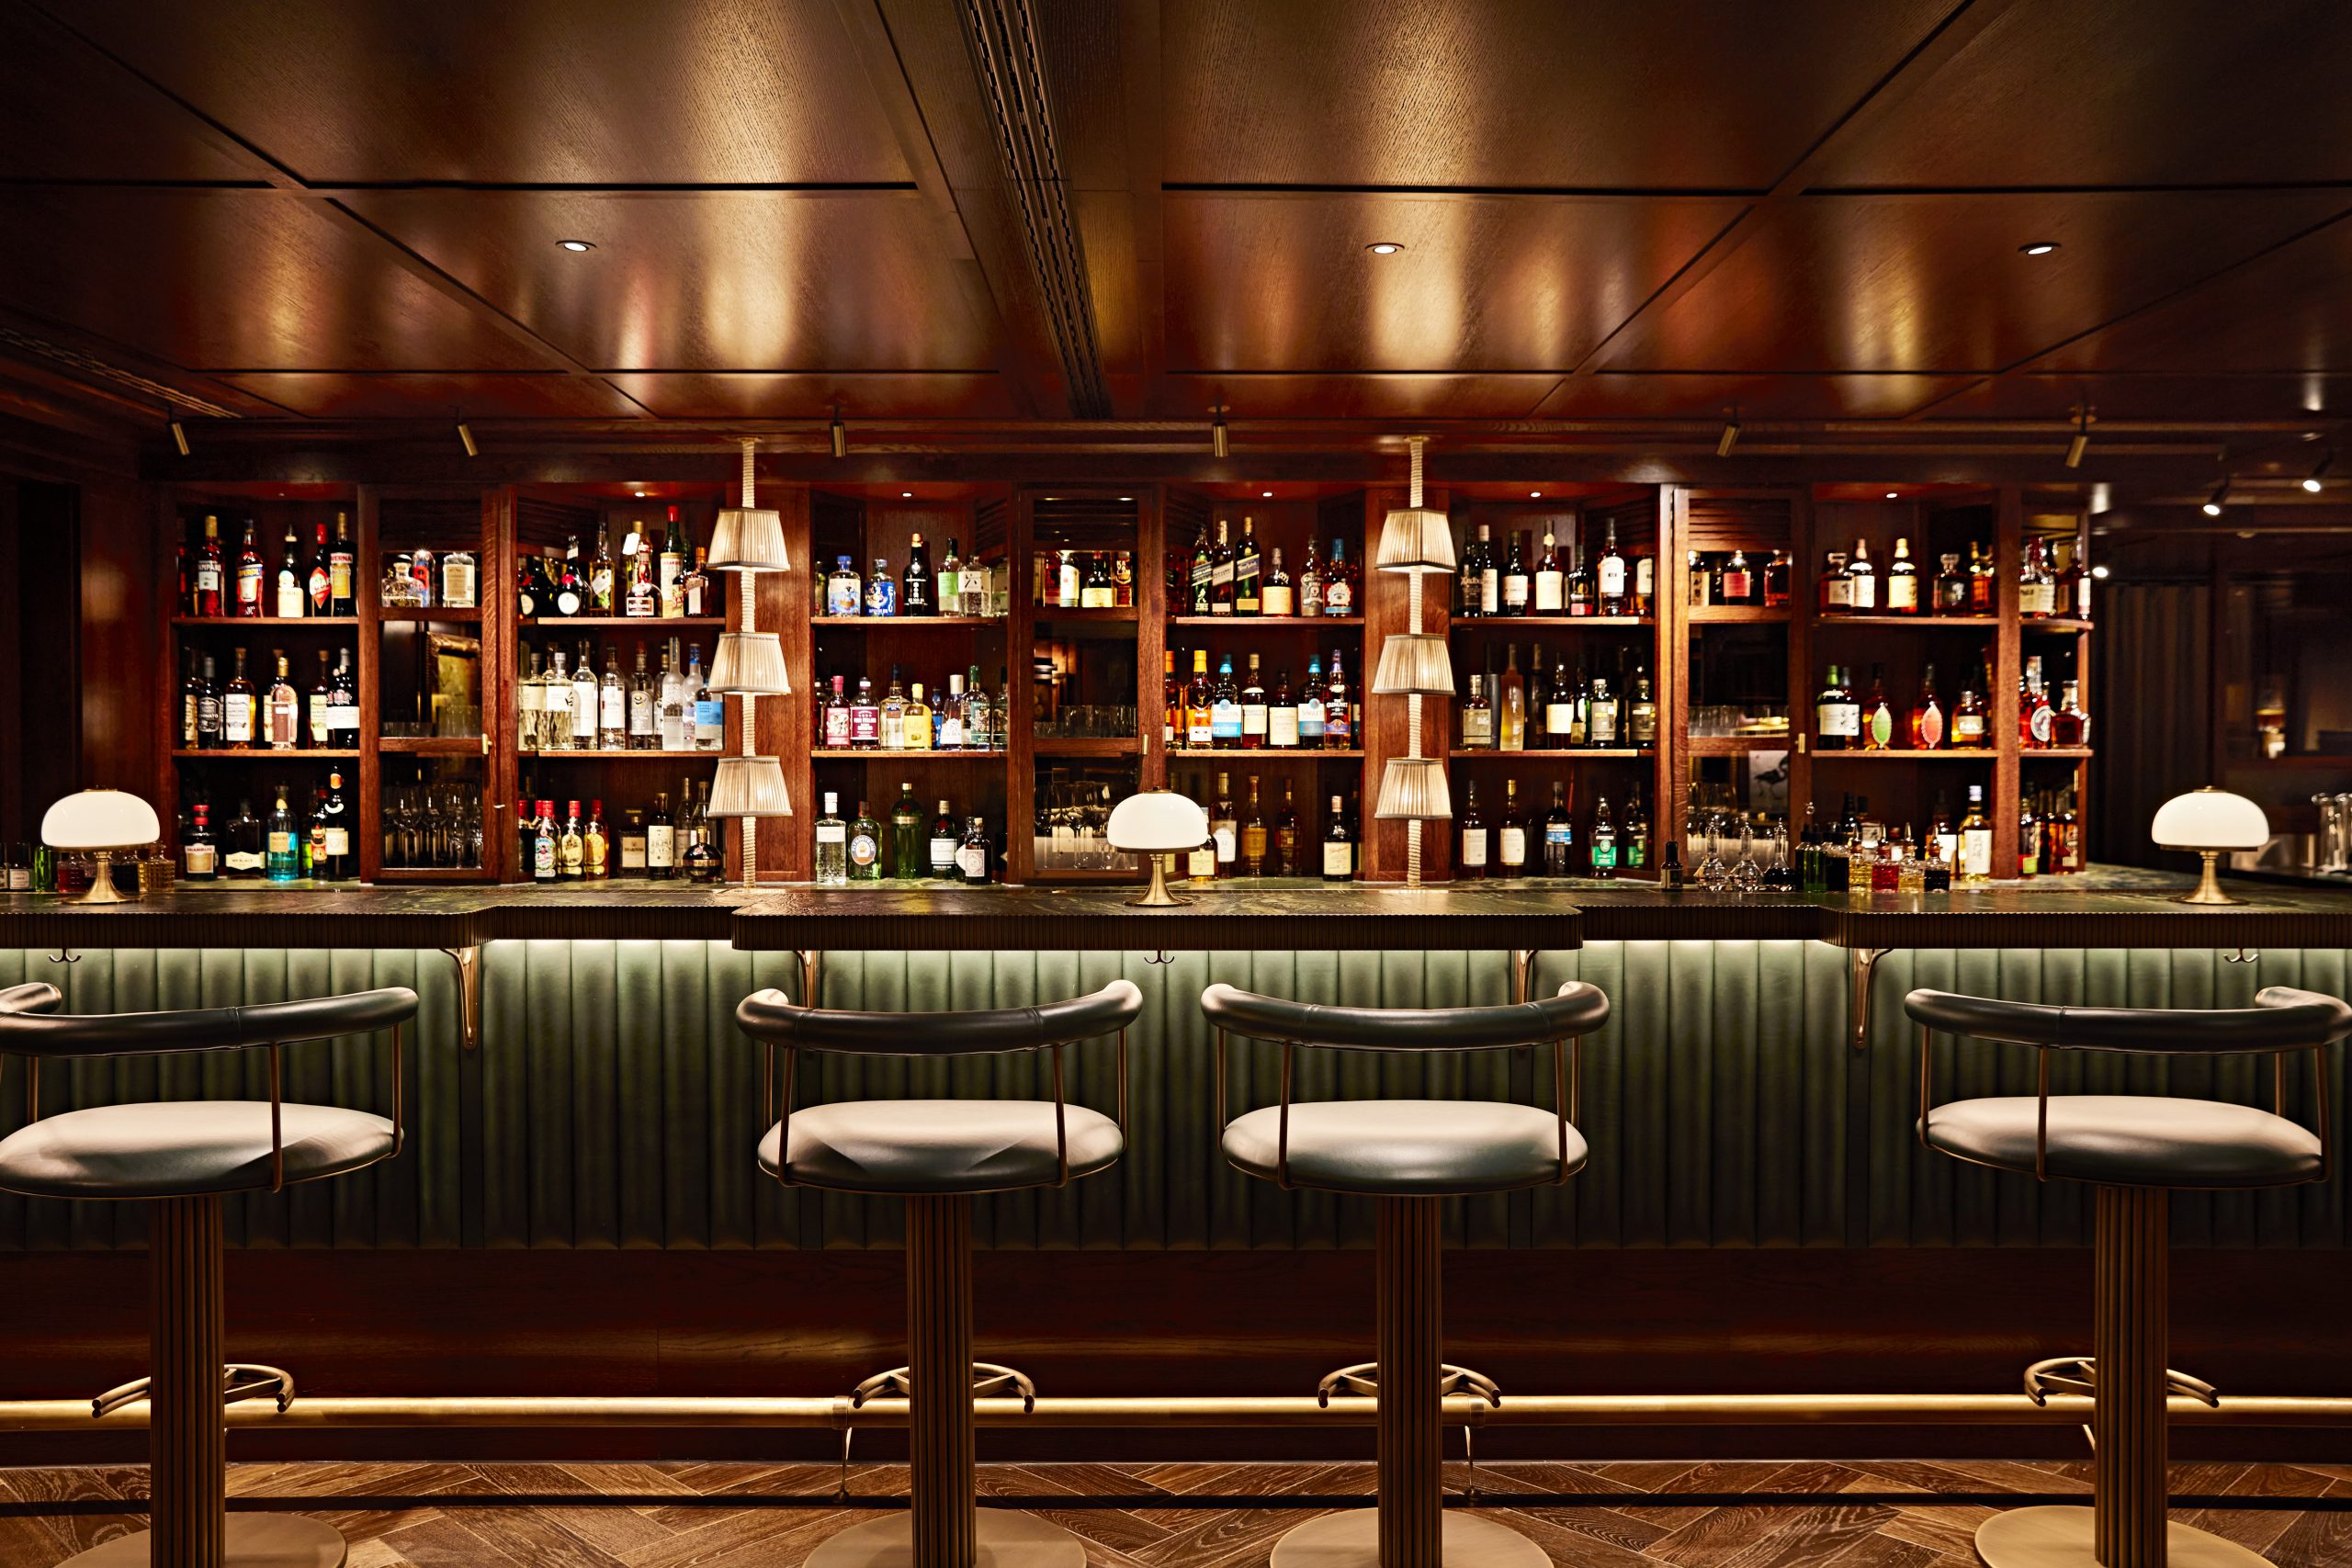 Aubrey bar interior, with 20th-century ambiance